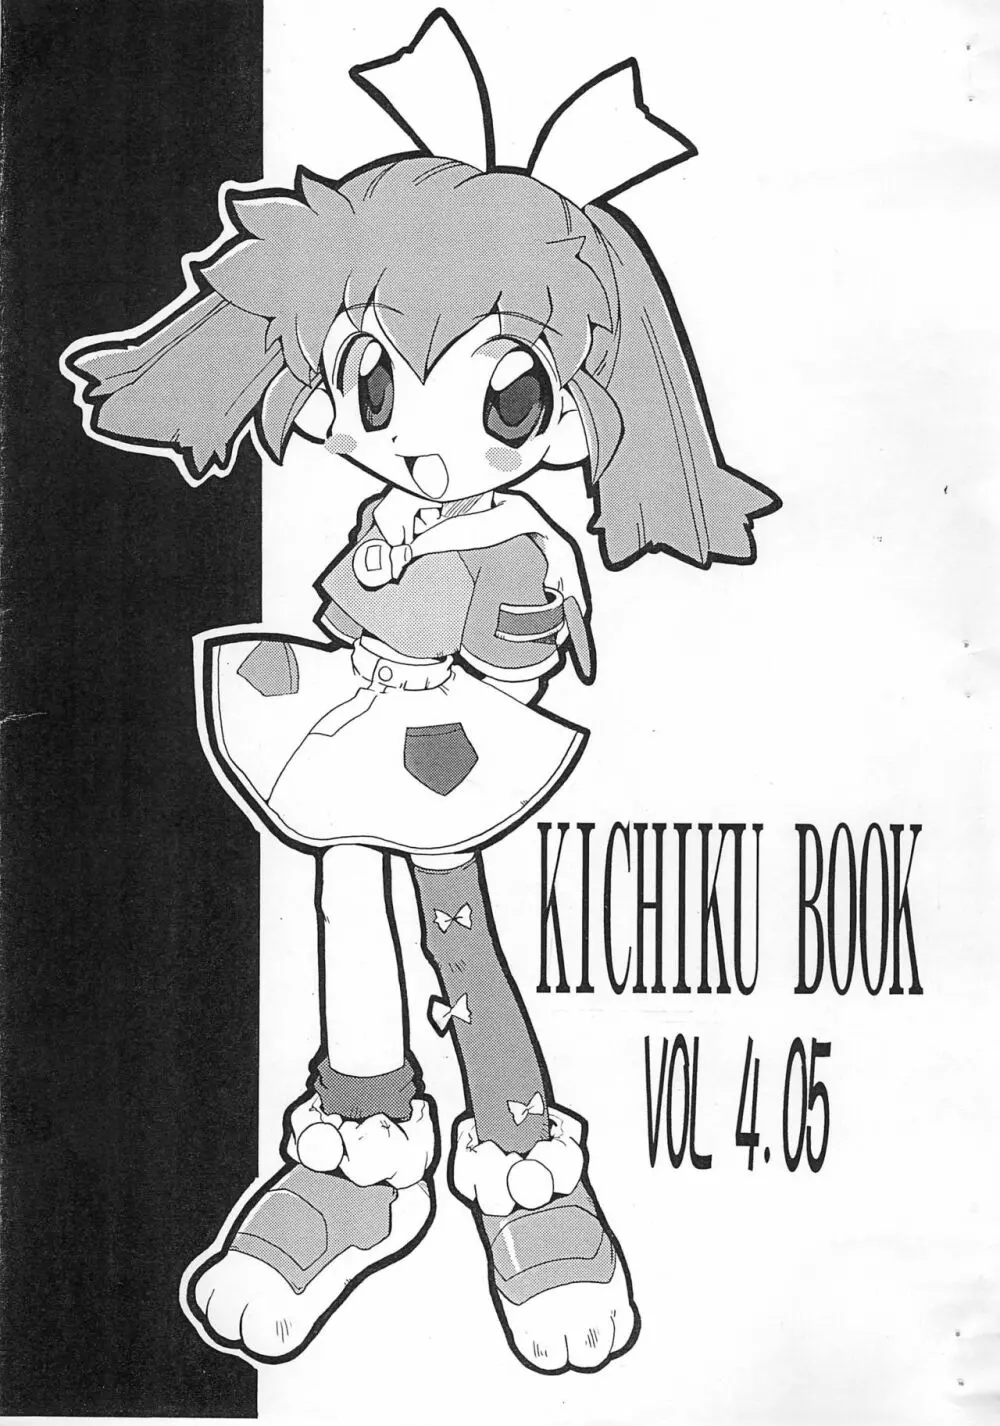 KICHIKU BOOK VOL4.05 - page1